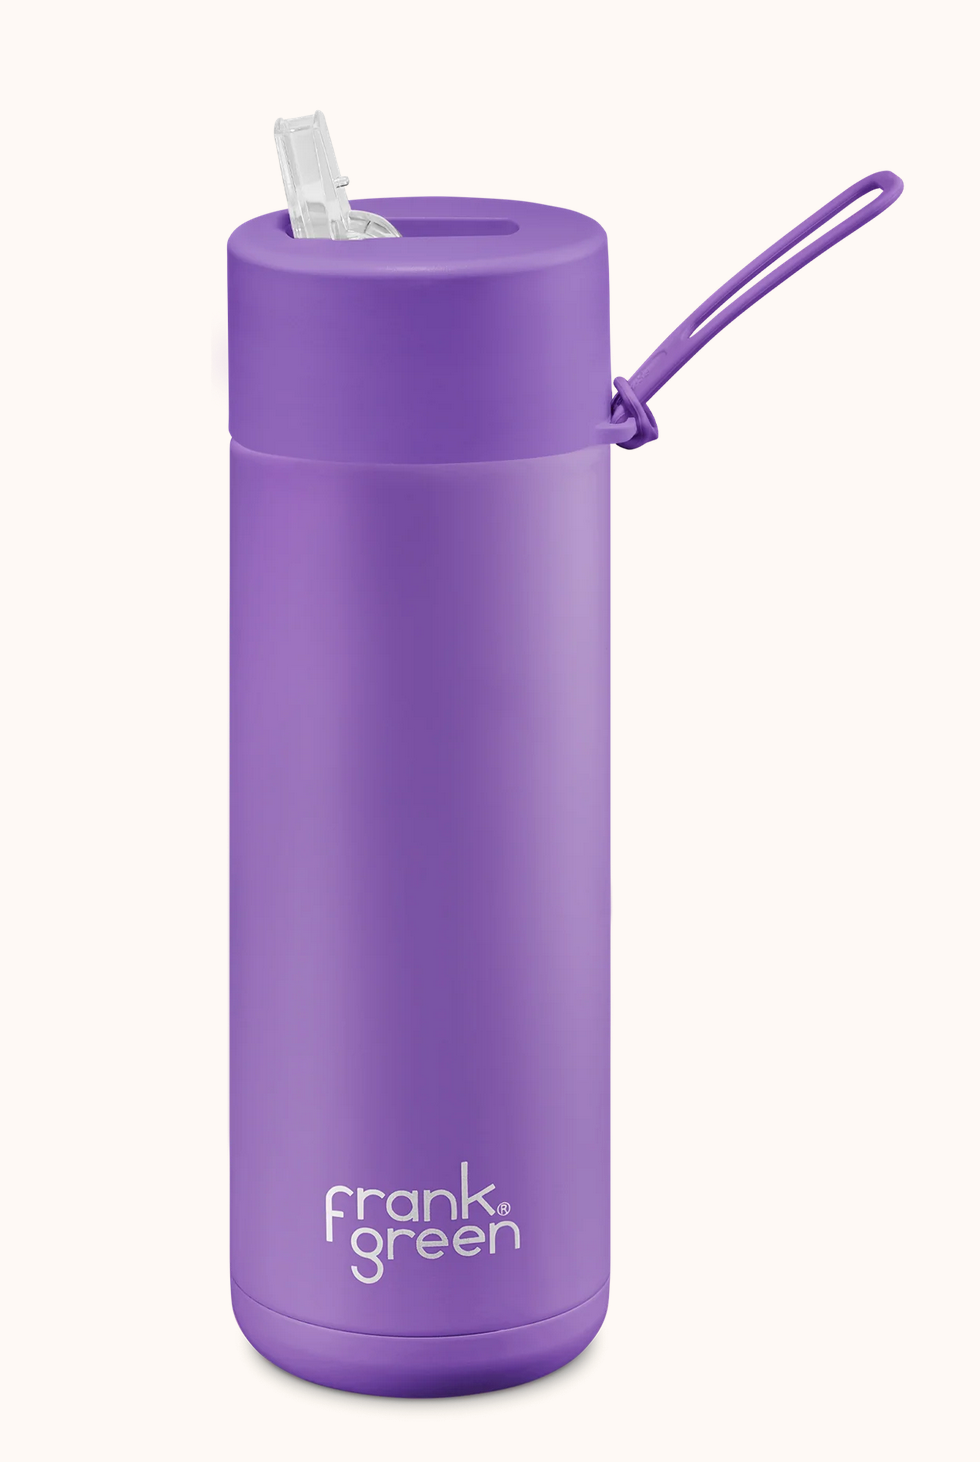 frank green Limited Edition Cosmic Purple Ceramic Reusable Bottle - 20oz / 595ml